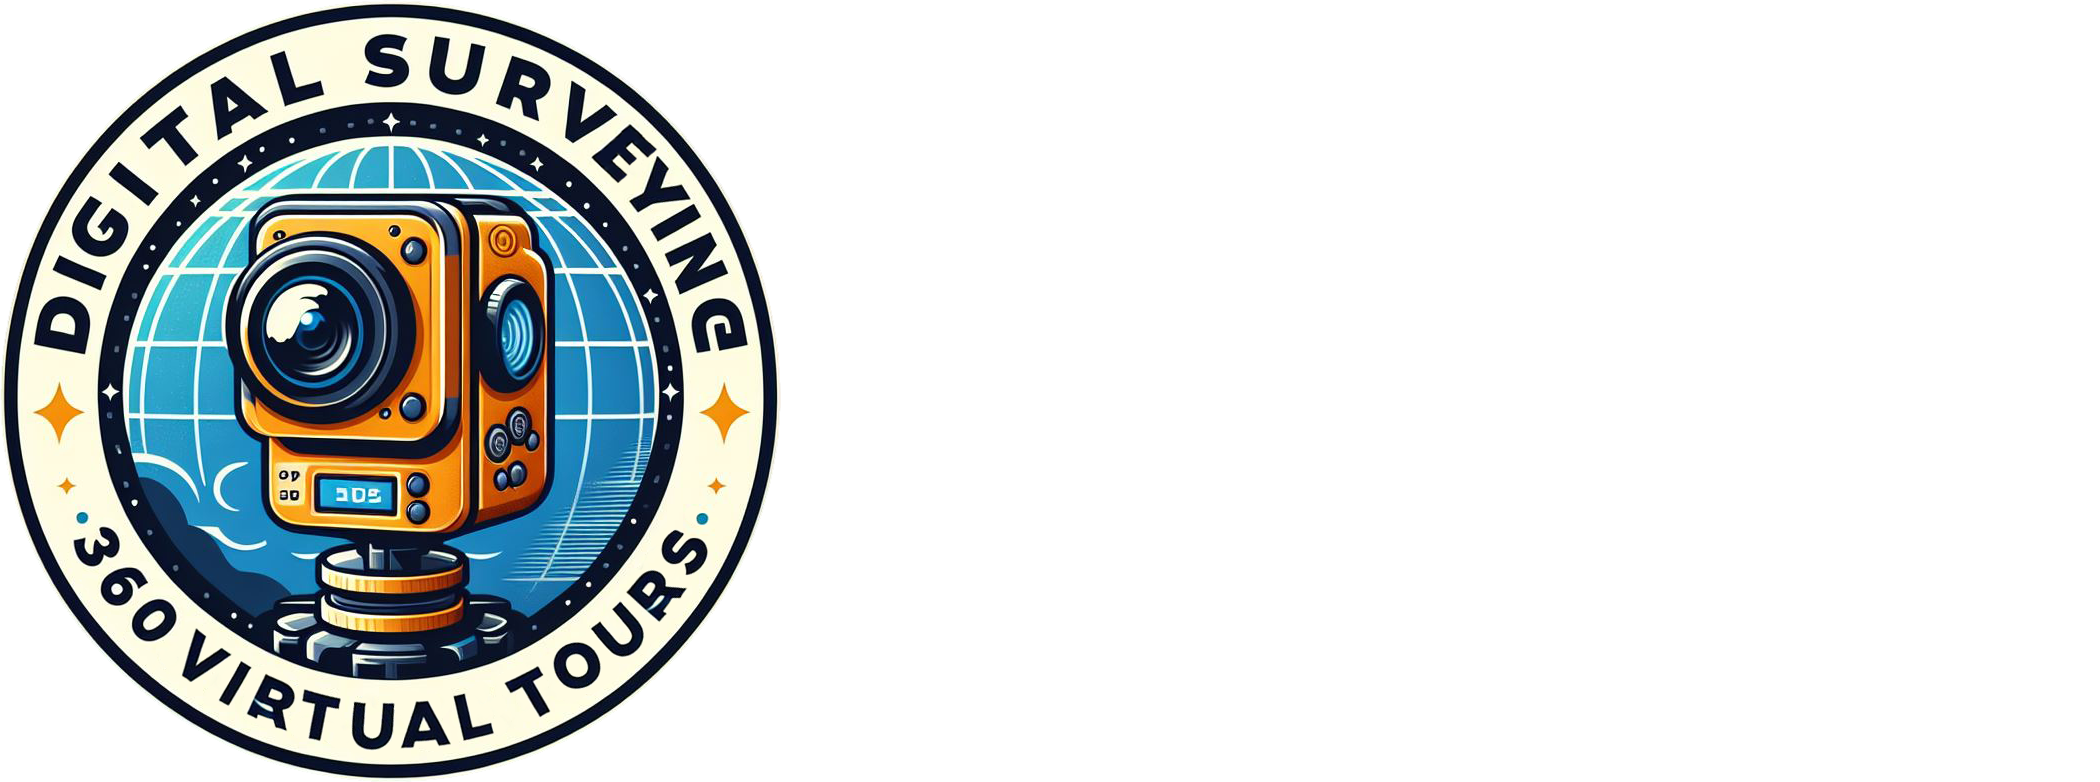 Digital Surveying